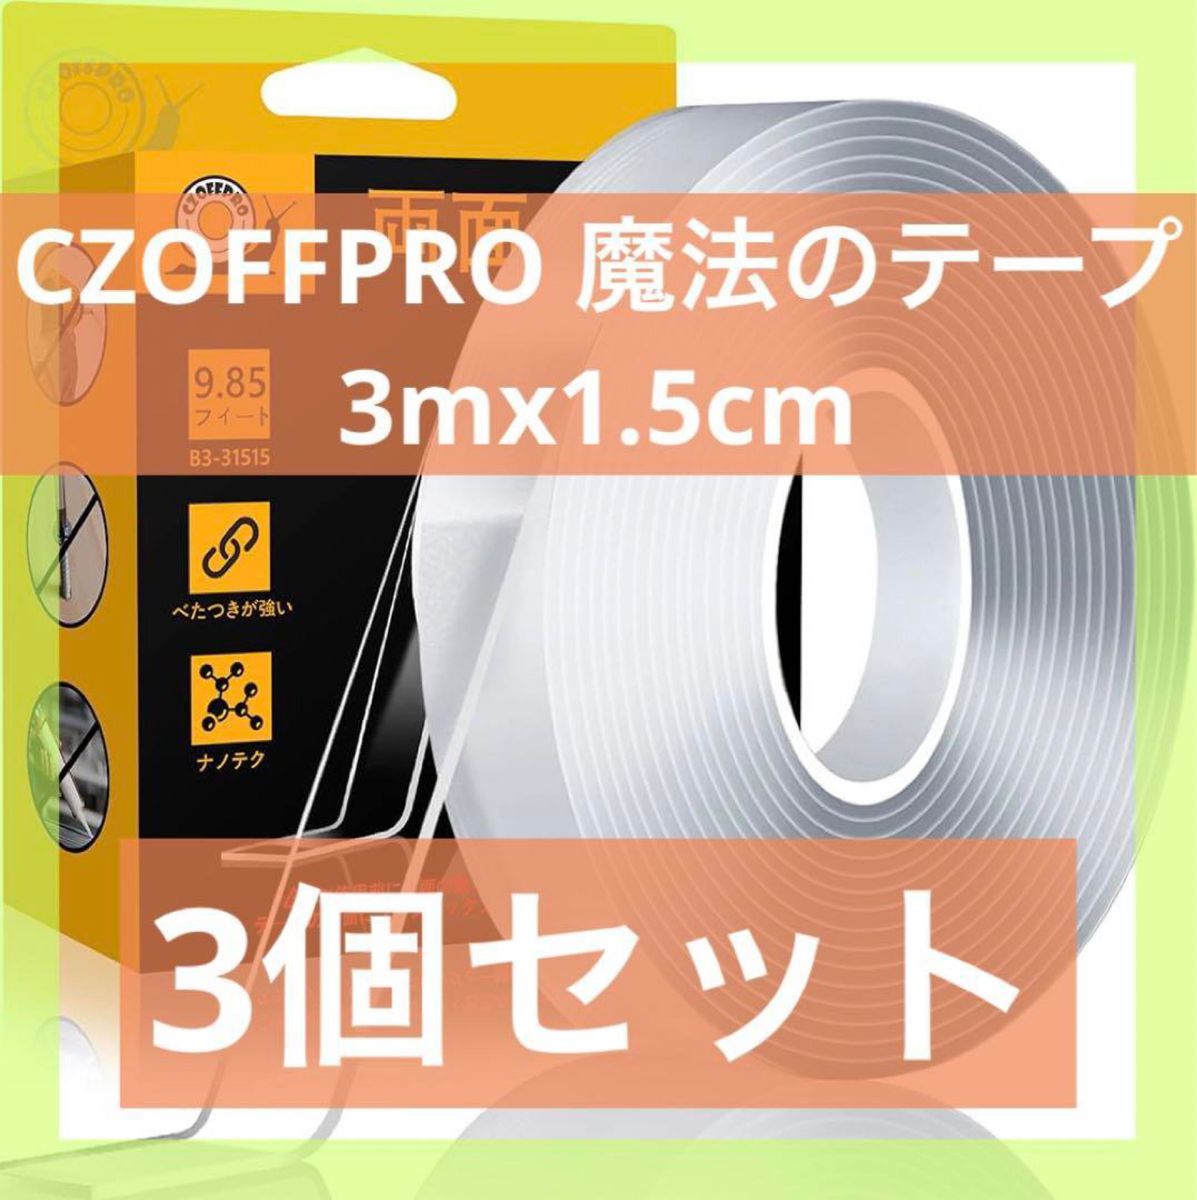 CZOFFPRO 両面テープ 魔法テープ テープ 強力 マジックテープ はがせる粘着テープ クリアナノ両面 両面テープ 魔法テープ